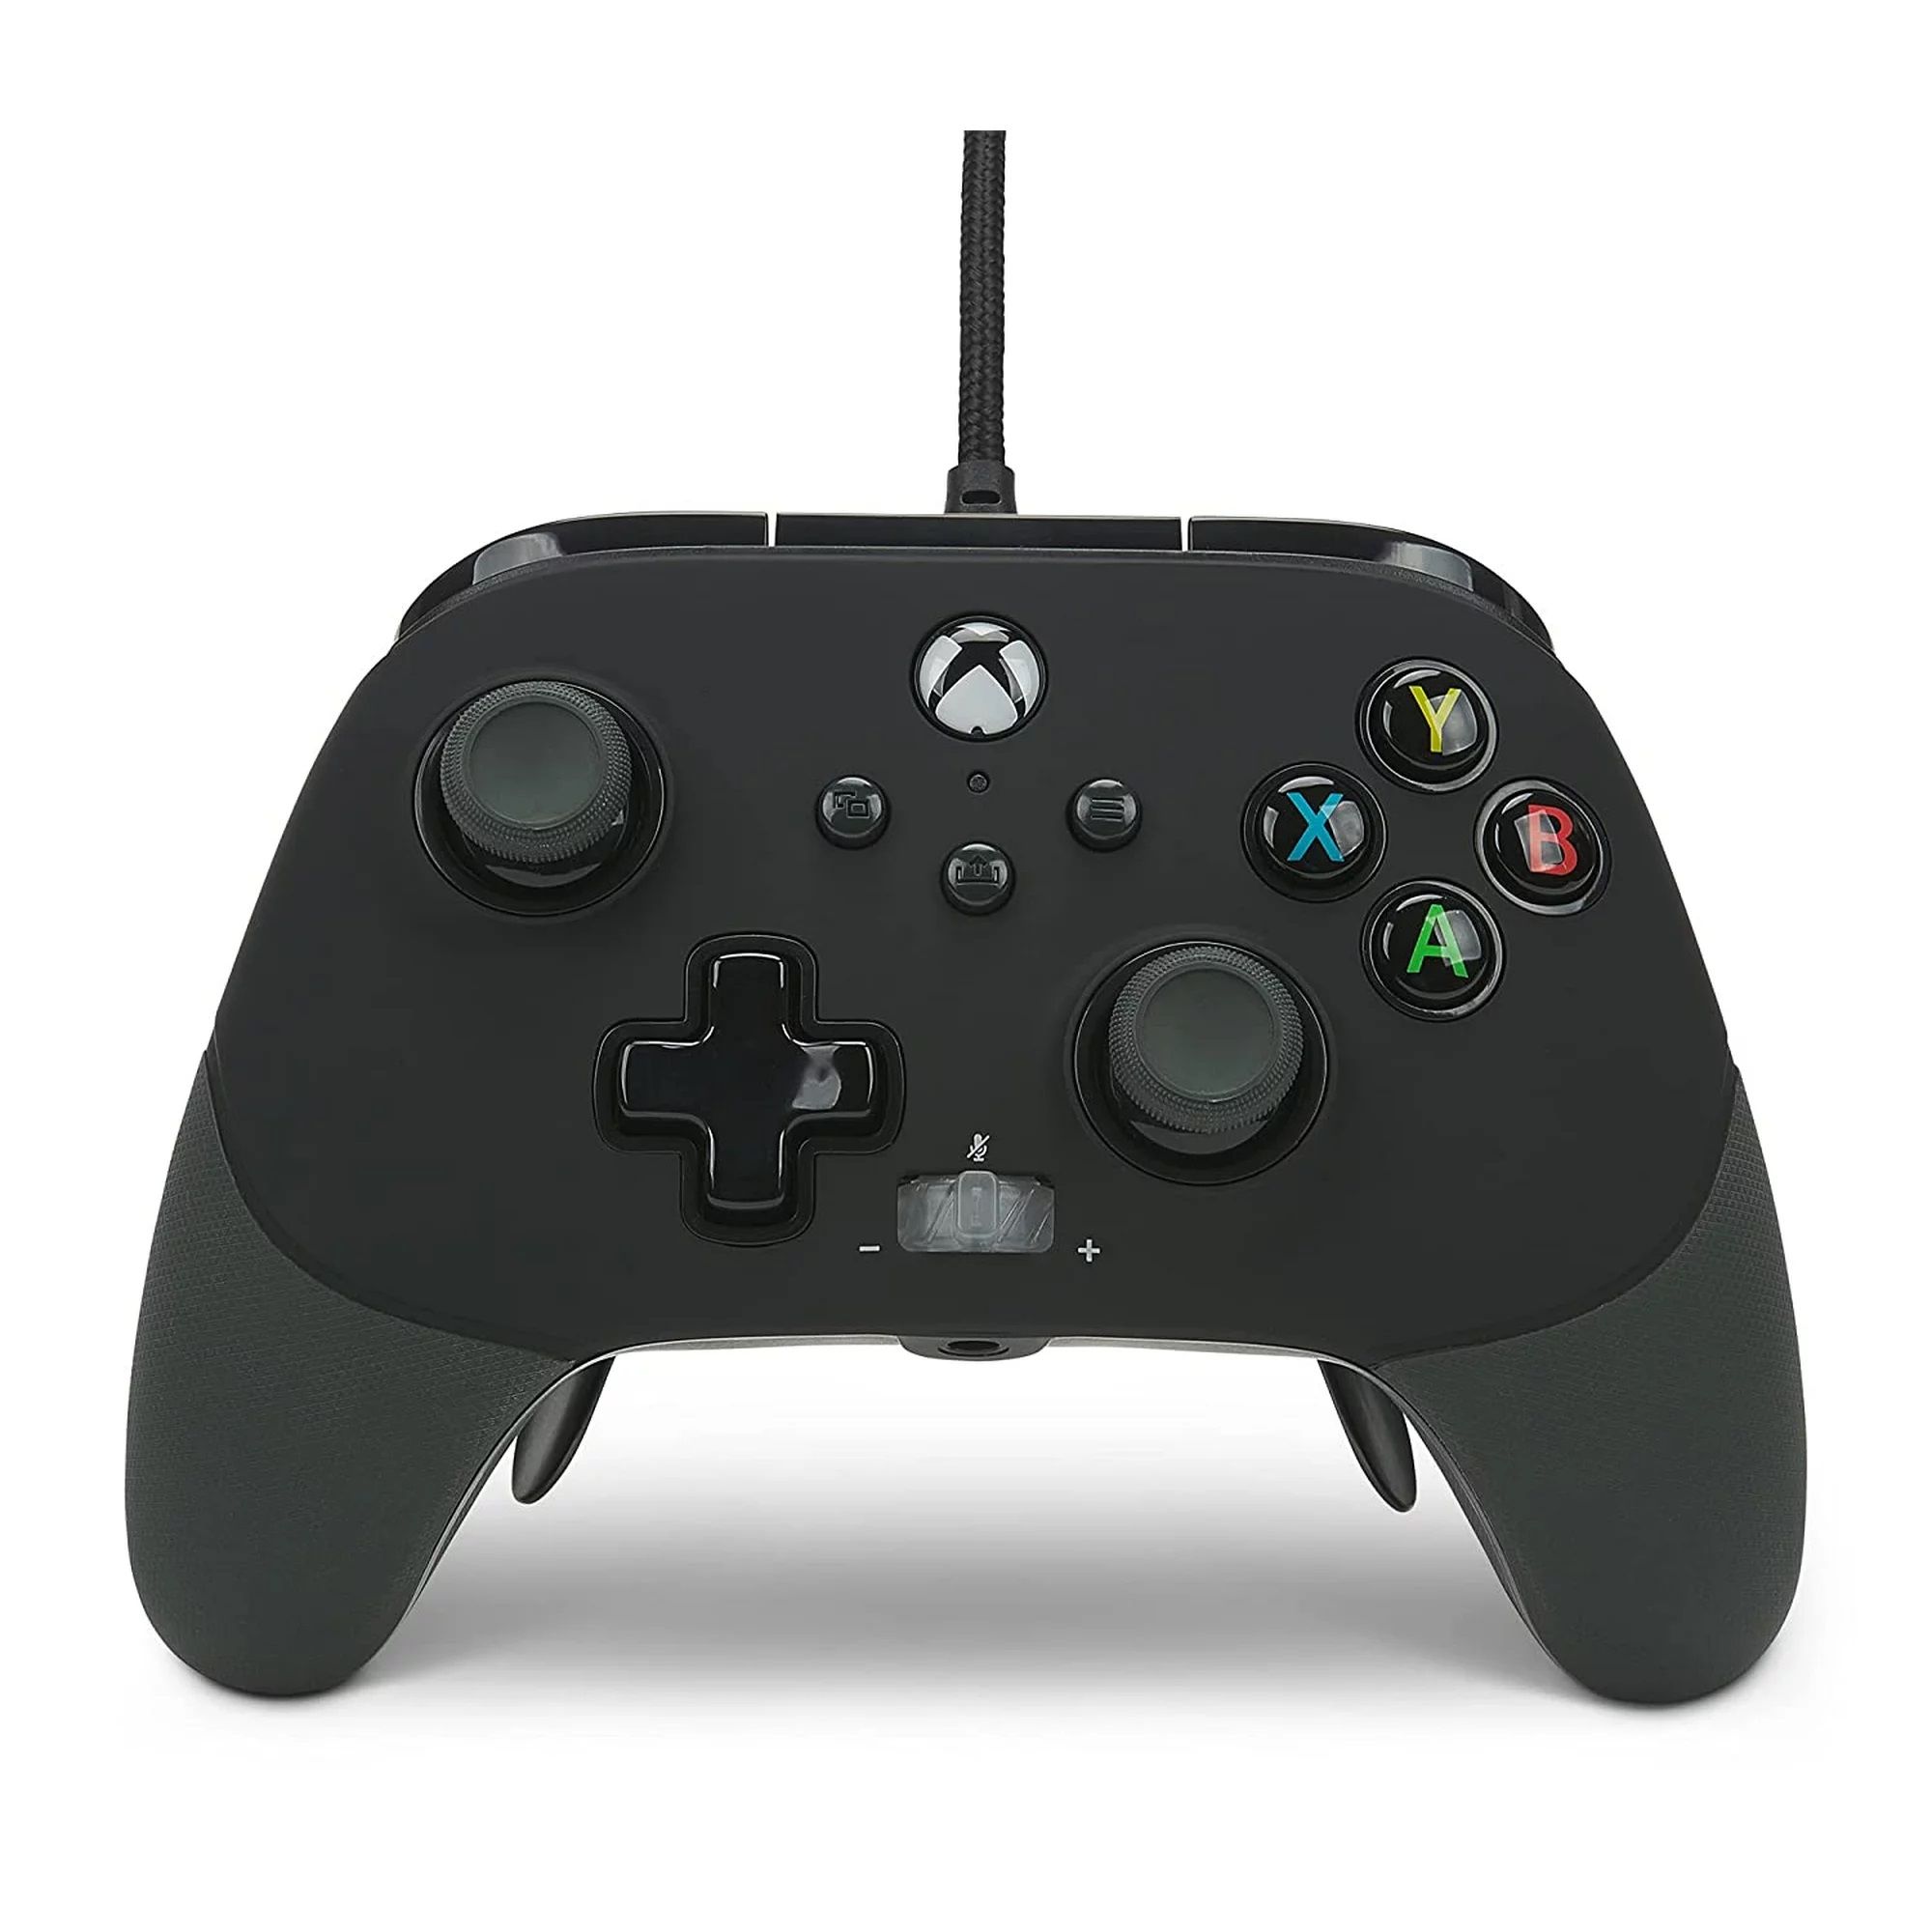 Roblox Xbox One controls